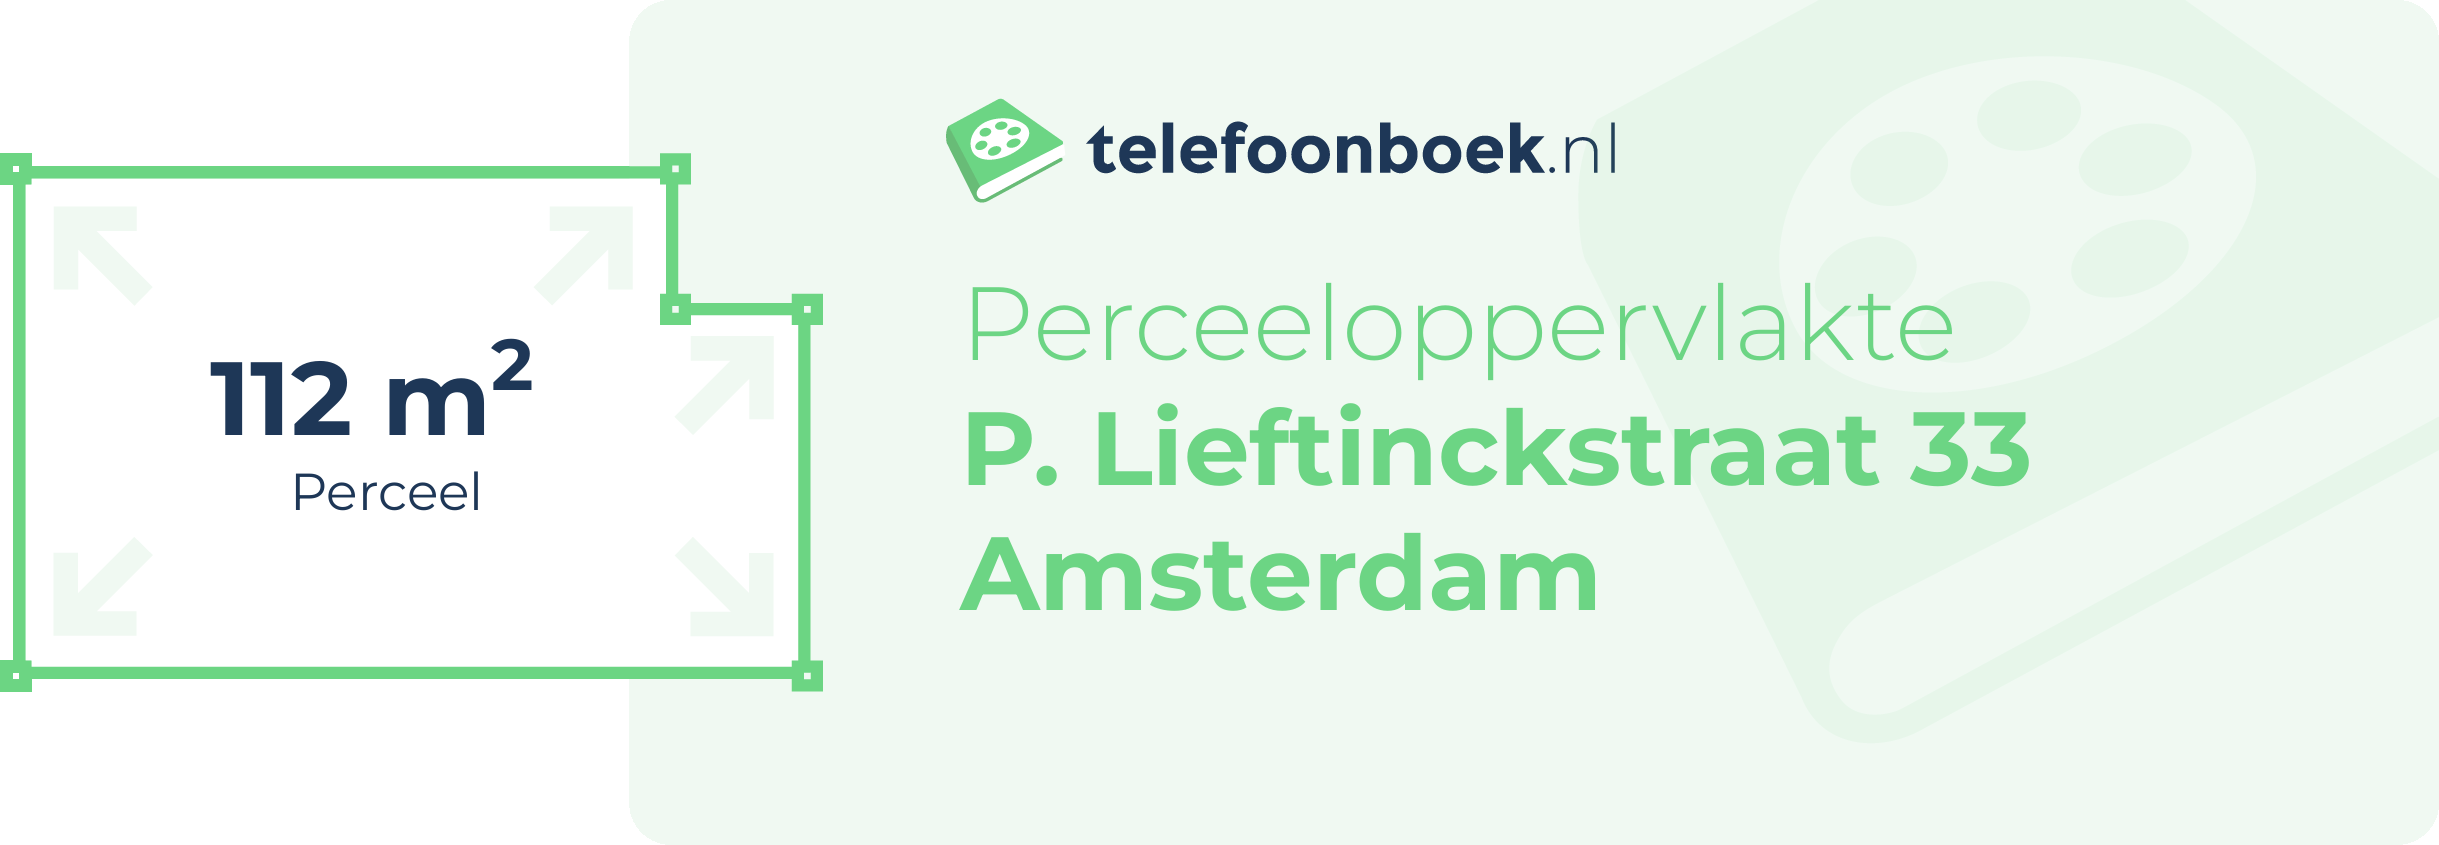 Perceeloppervlakte P. Lieftinckstraat 33 Amsterdam